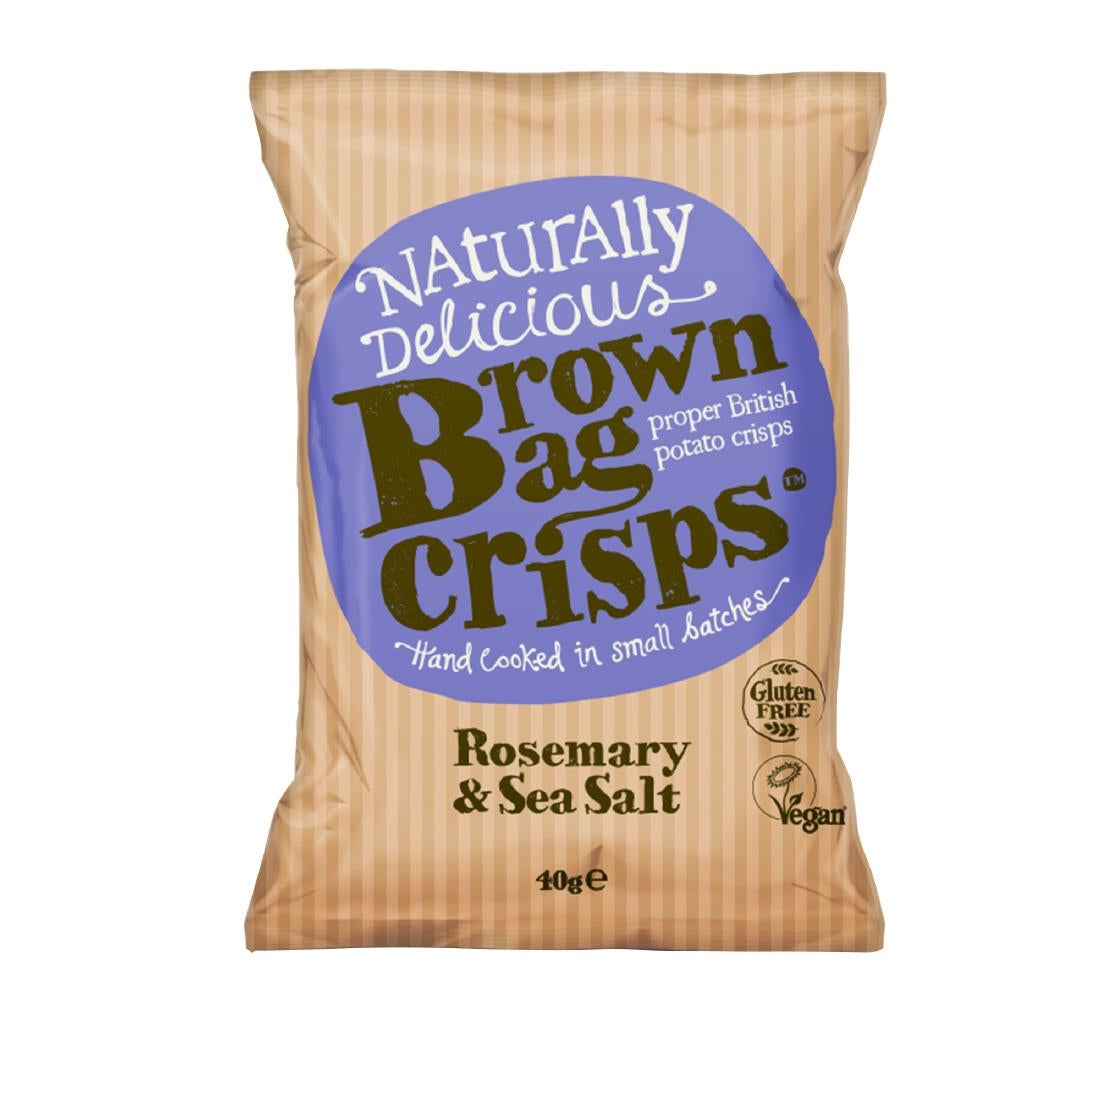 FU435 Brown Bag Crisps Rosemary and Sea Salt 40g (Pack of 20)